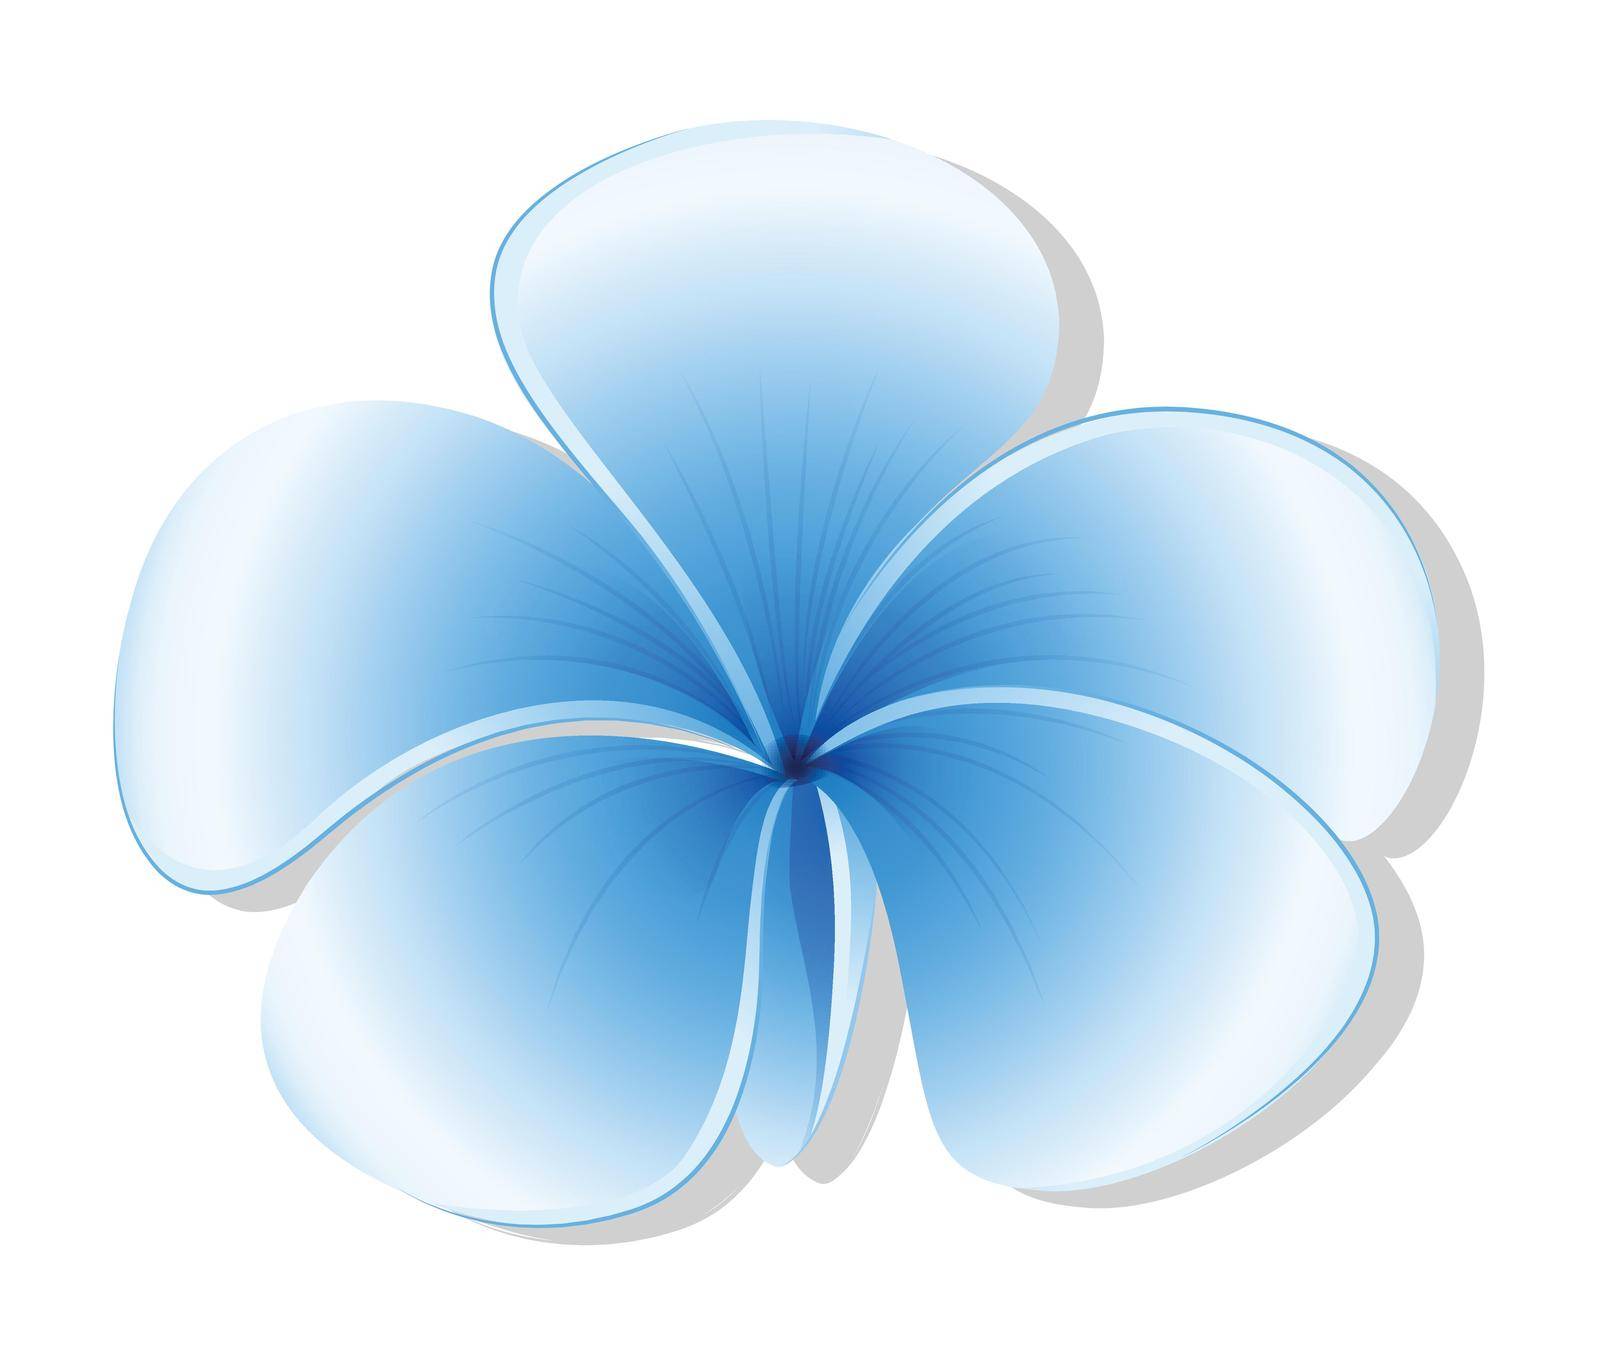 A fresh five-petal blue flower by iimages